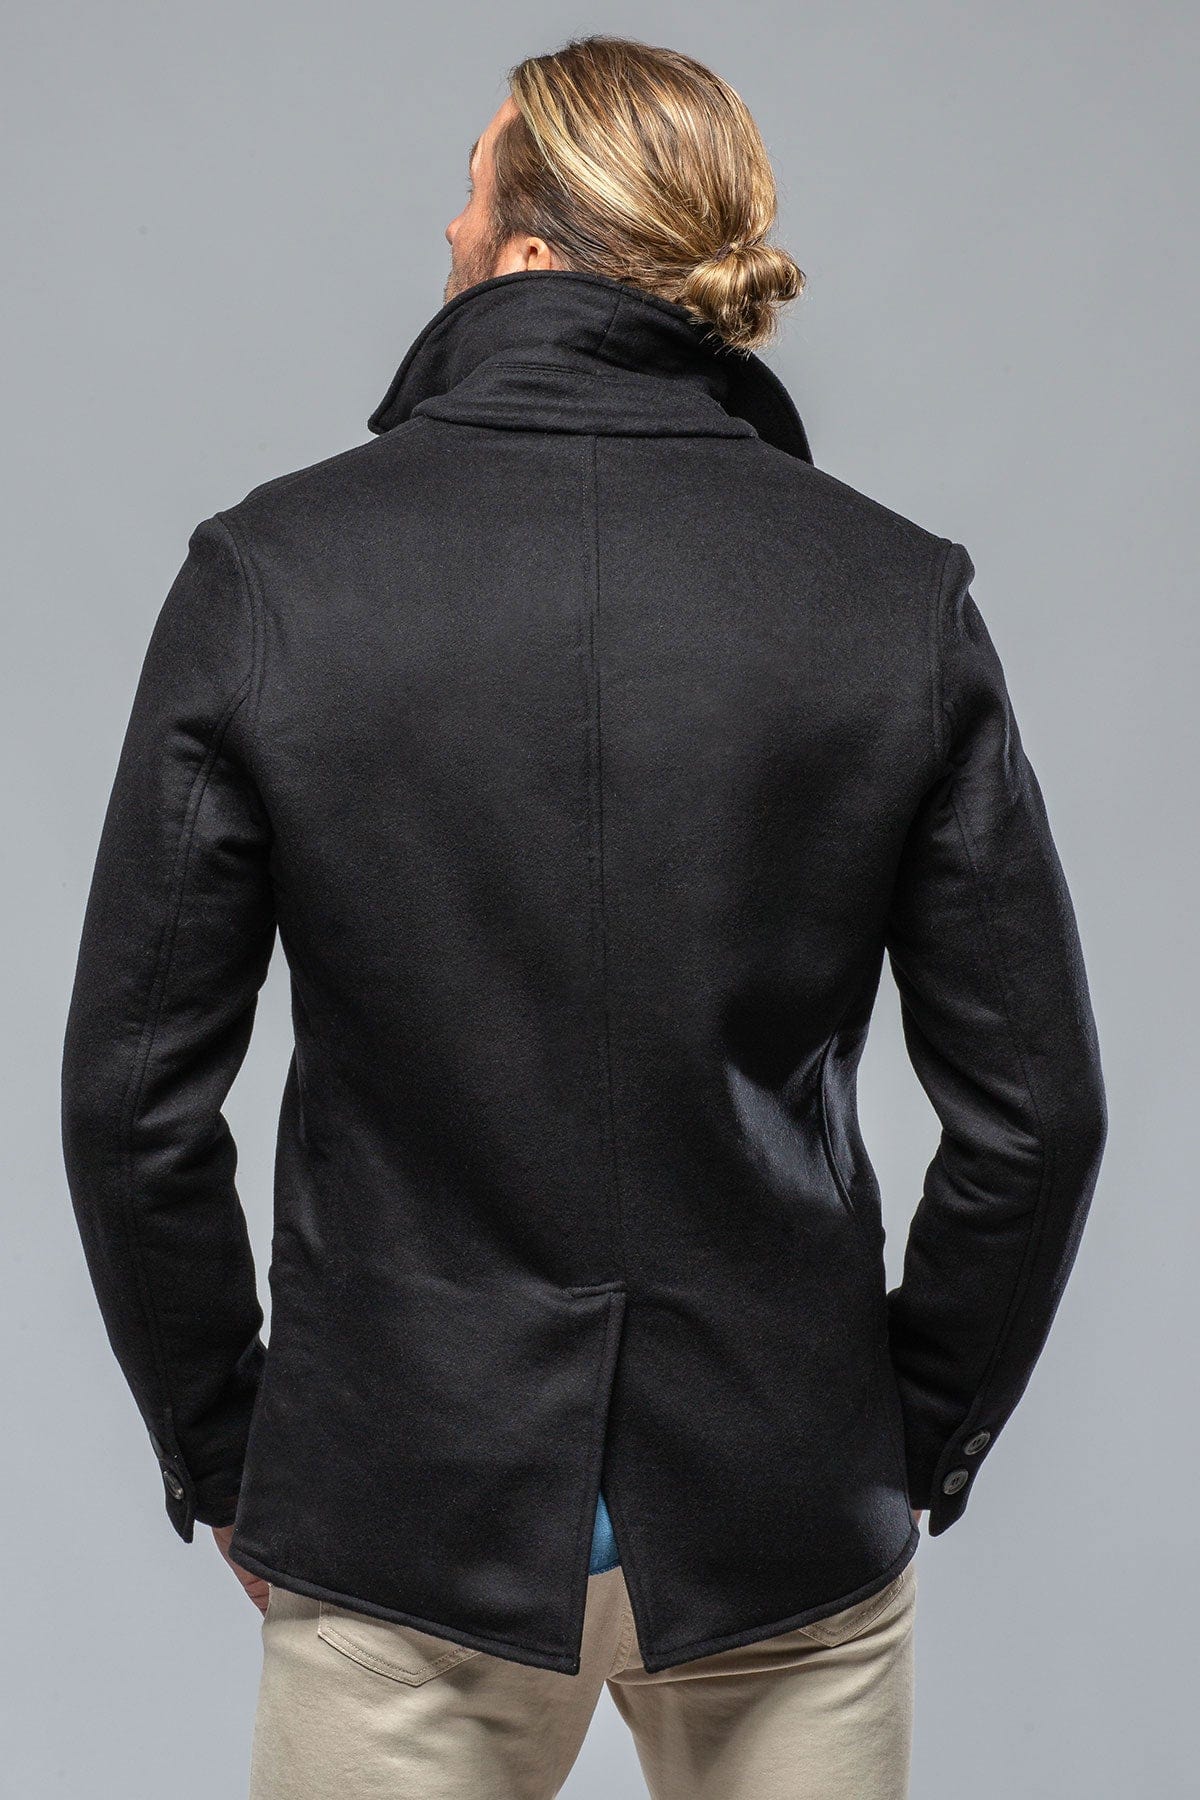 Kash Double Face Cashmere Coat In Black/Beige - AXEL'S